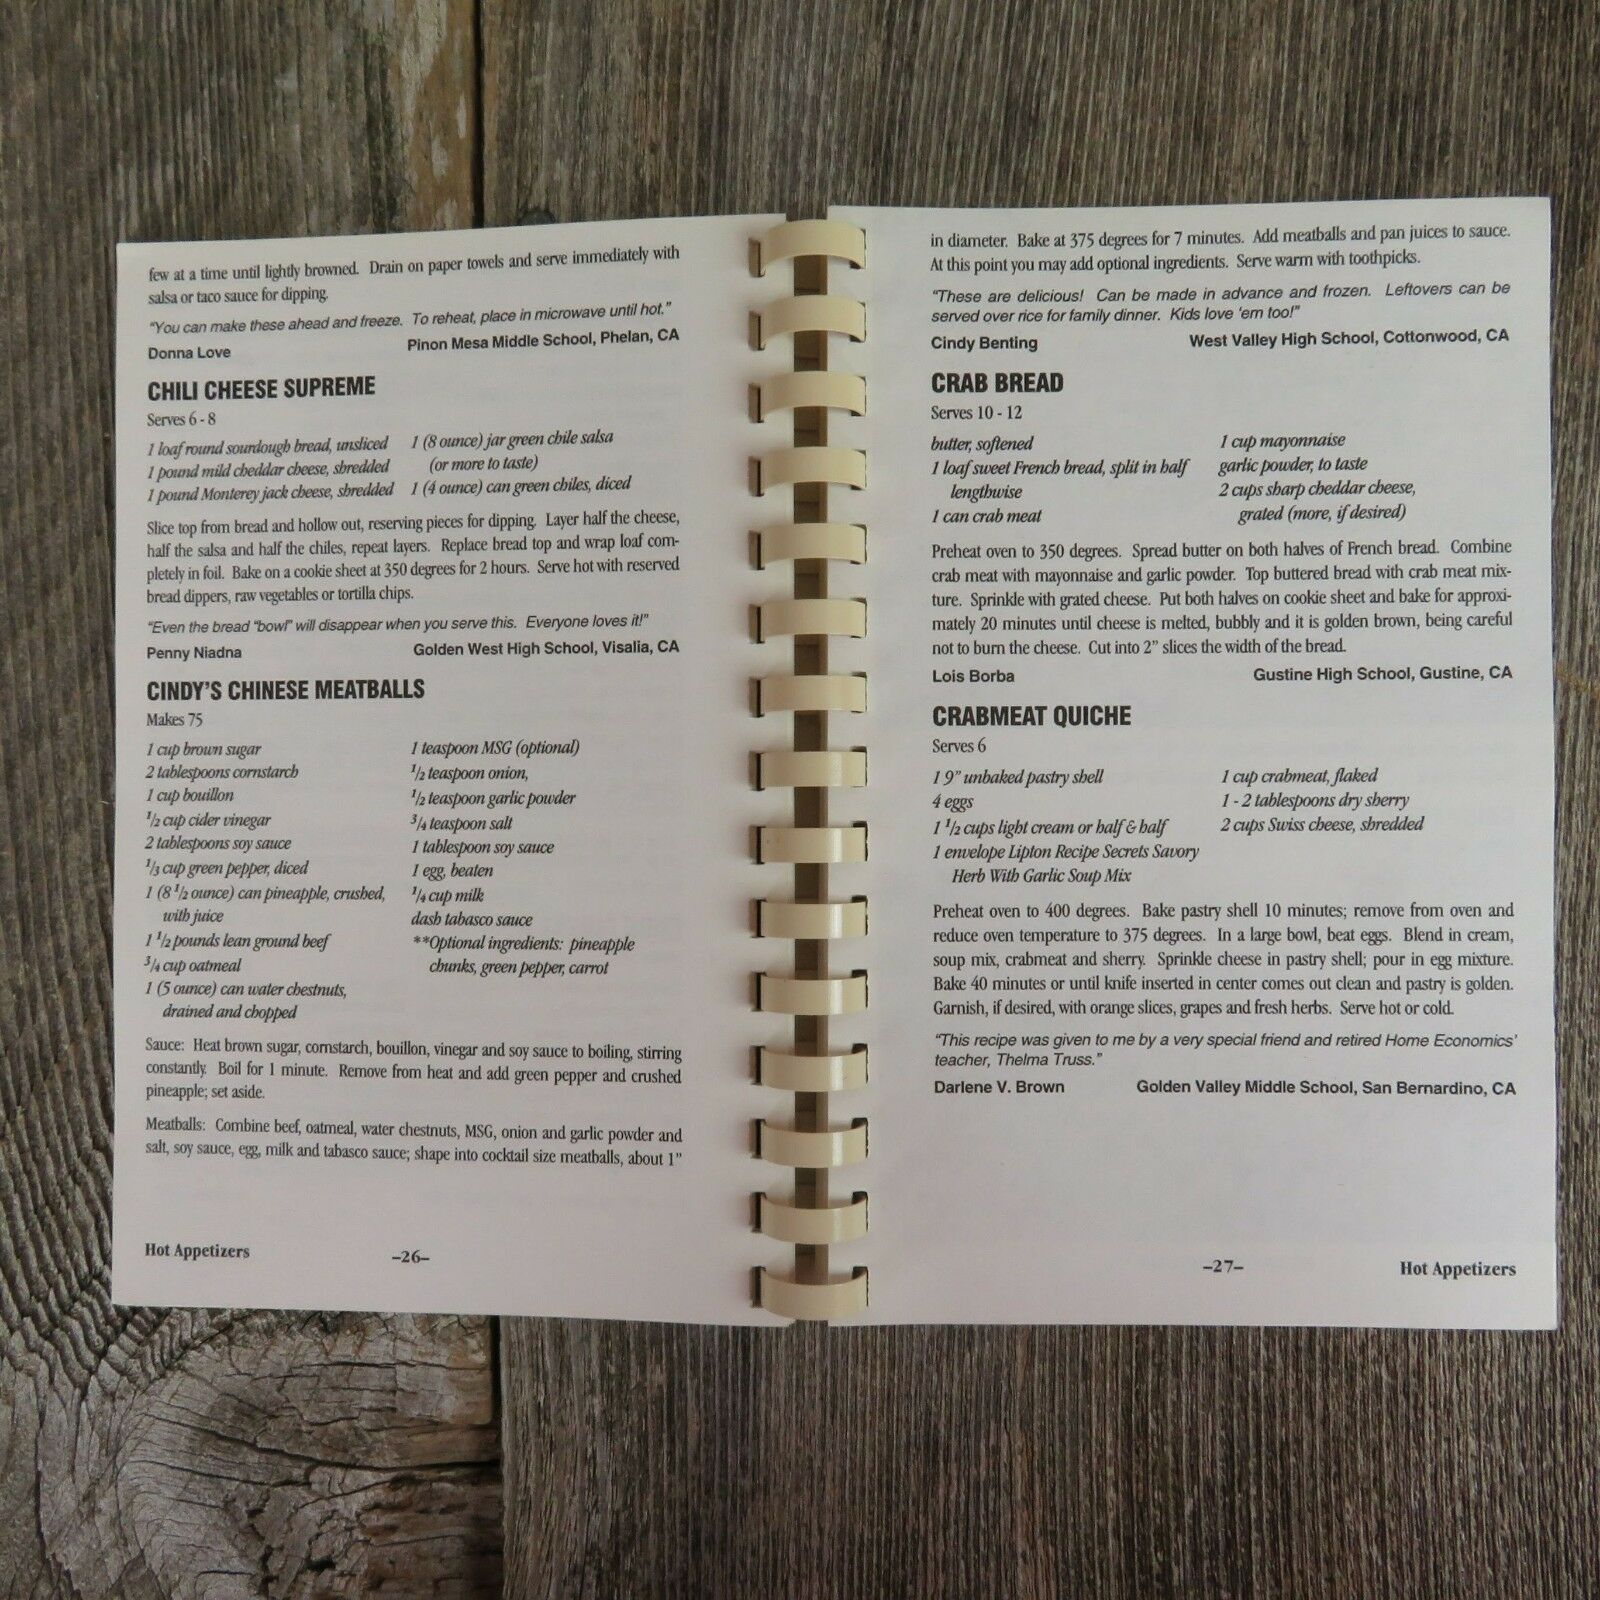 Vintage Party Foods Cookbook Home Economics Teachers Recipes - At Grandma's Table